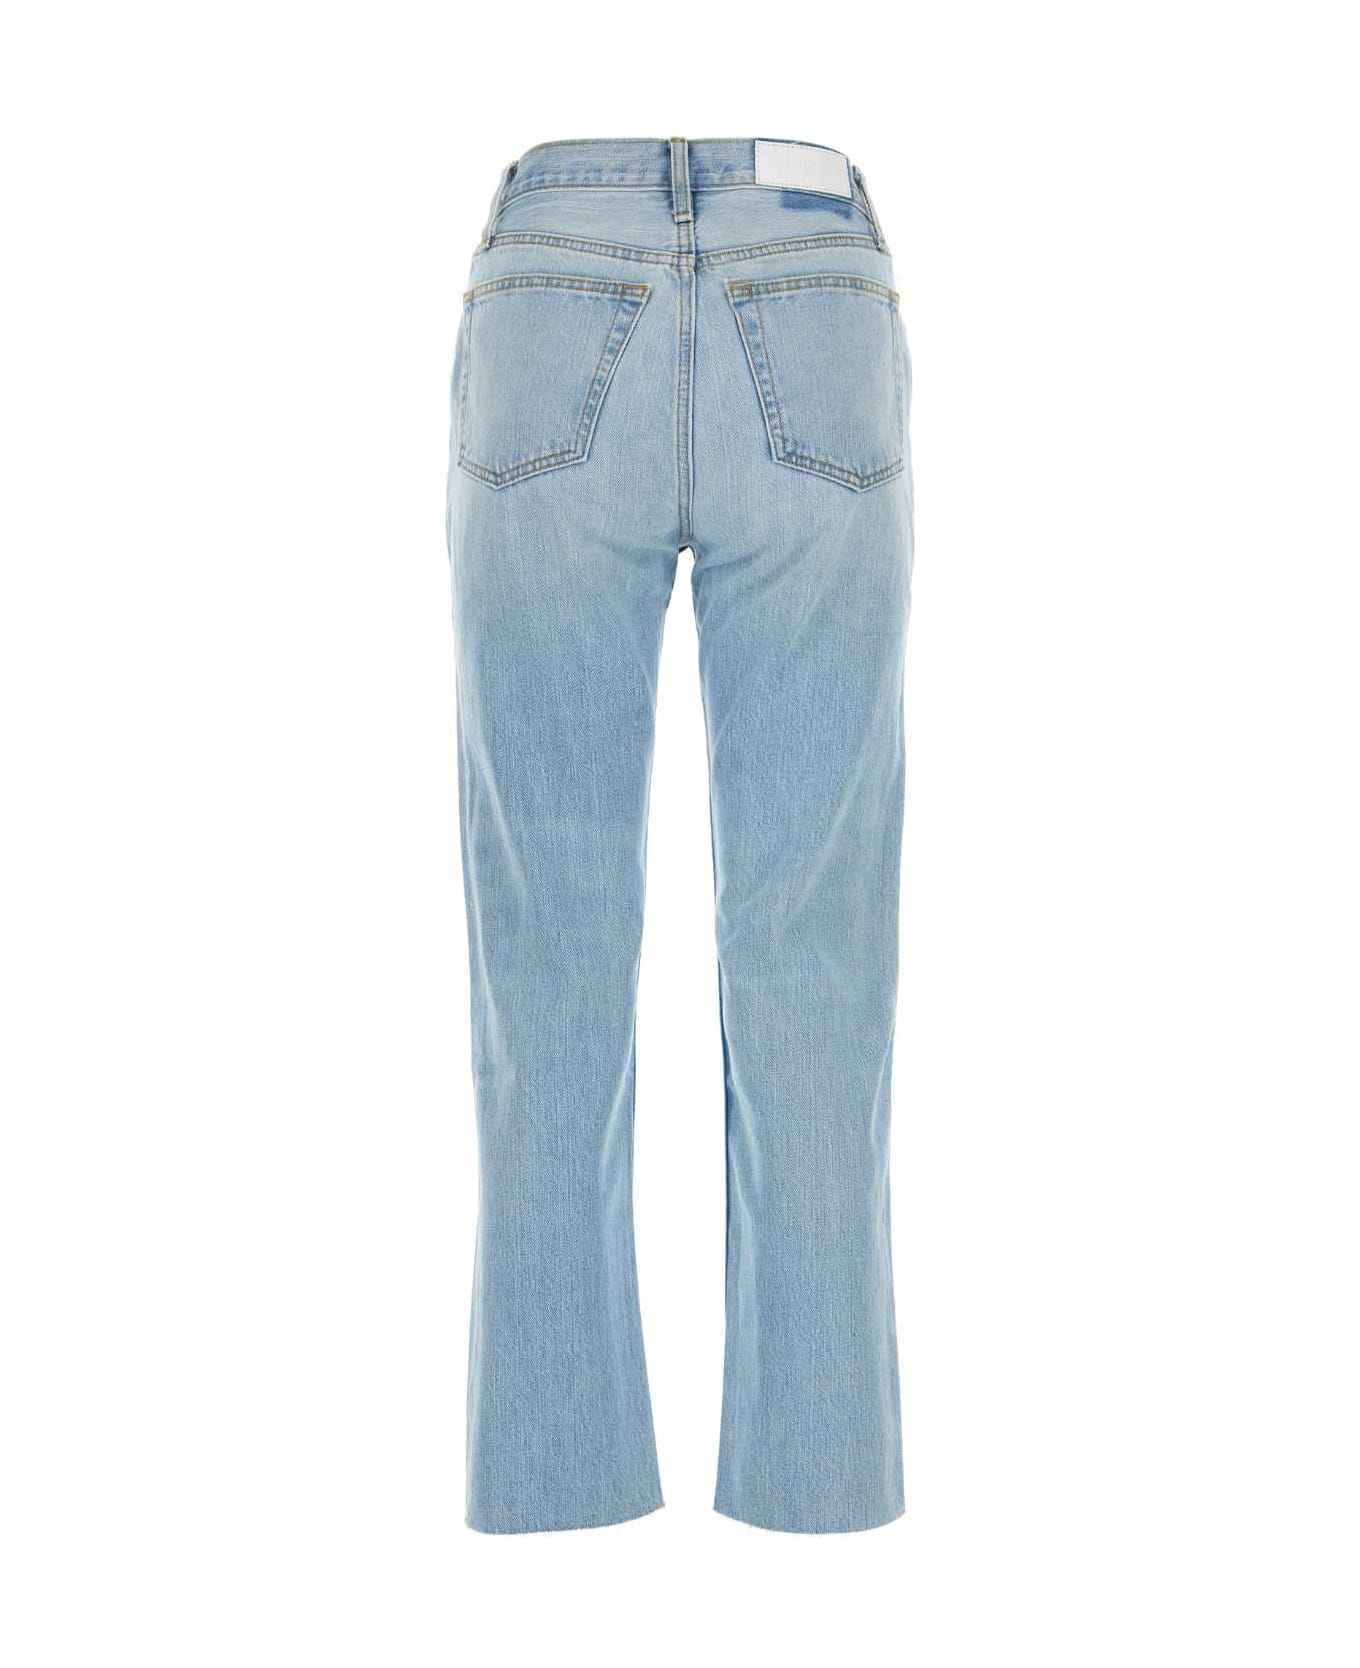 RE/DONE Denim Jeans - SURFBLUEDESTROYED